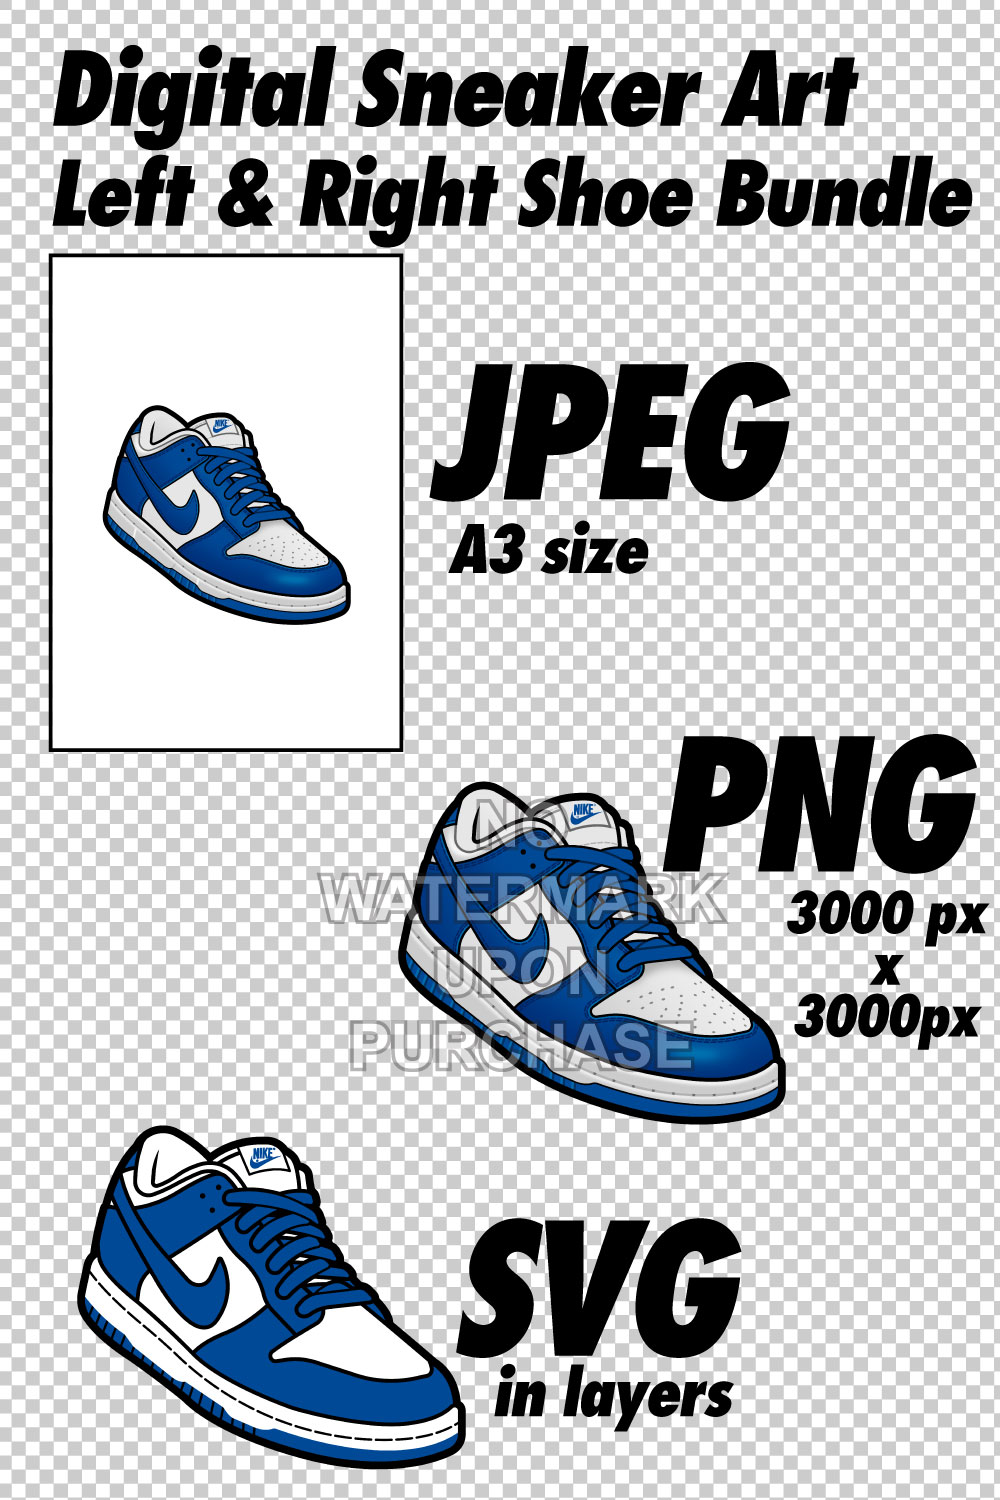 Dunk Low Kentucky JPEG PNG SVG right & left shoe bundle pinterest preview image.